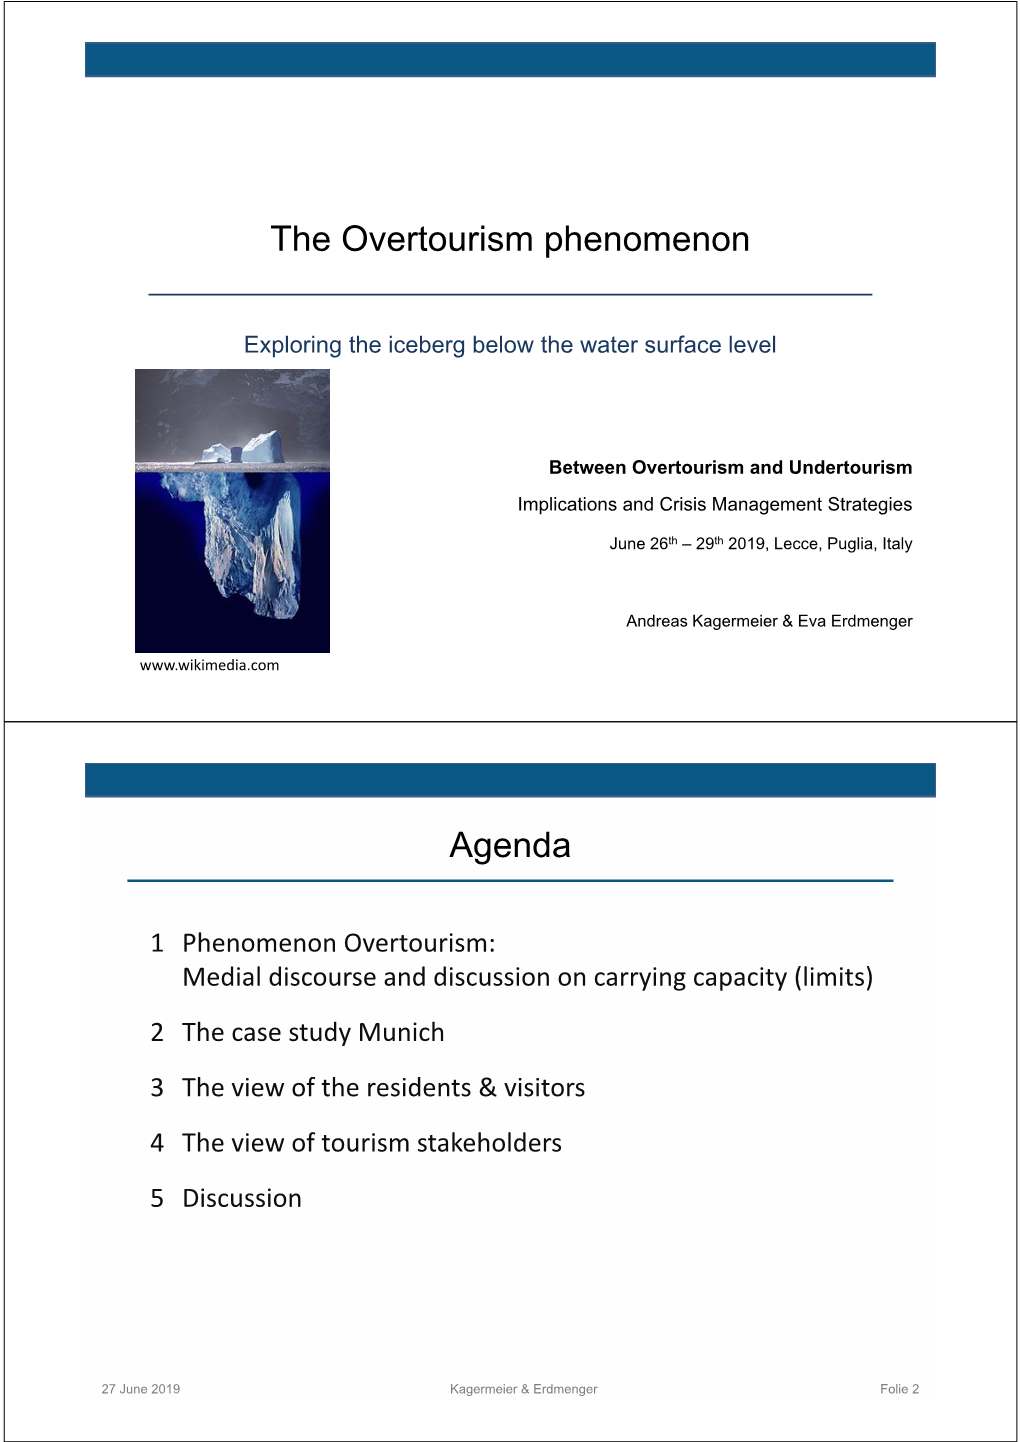 The Overtourism Phenomenon Agenda